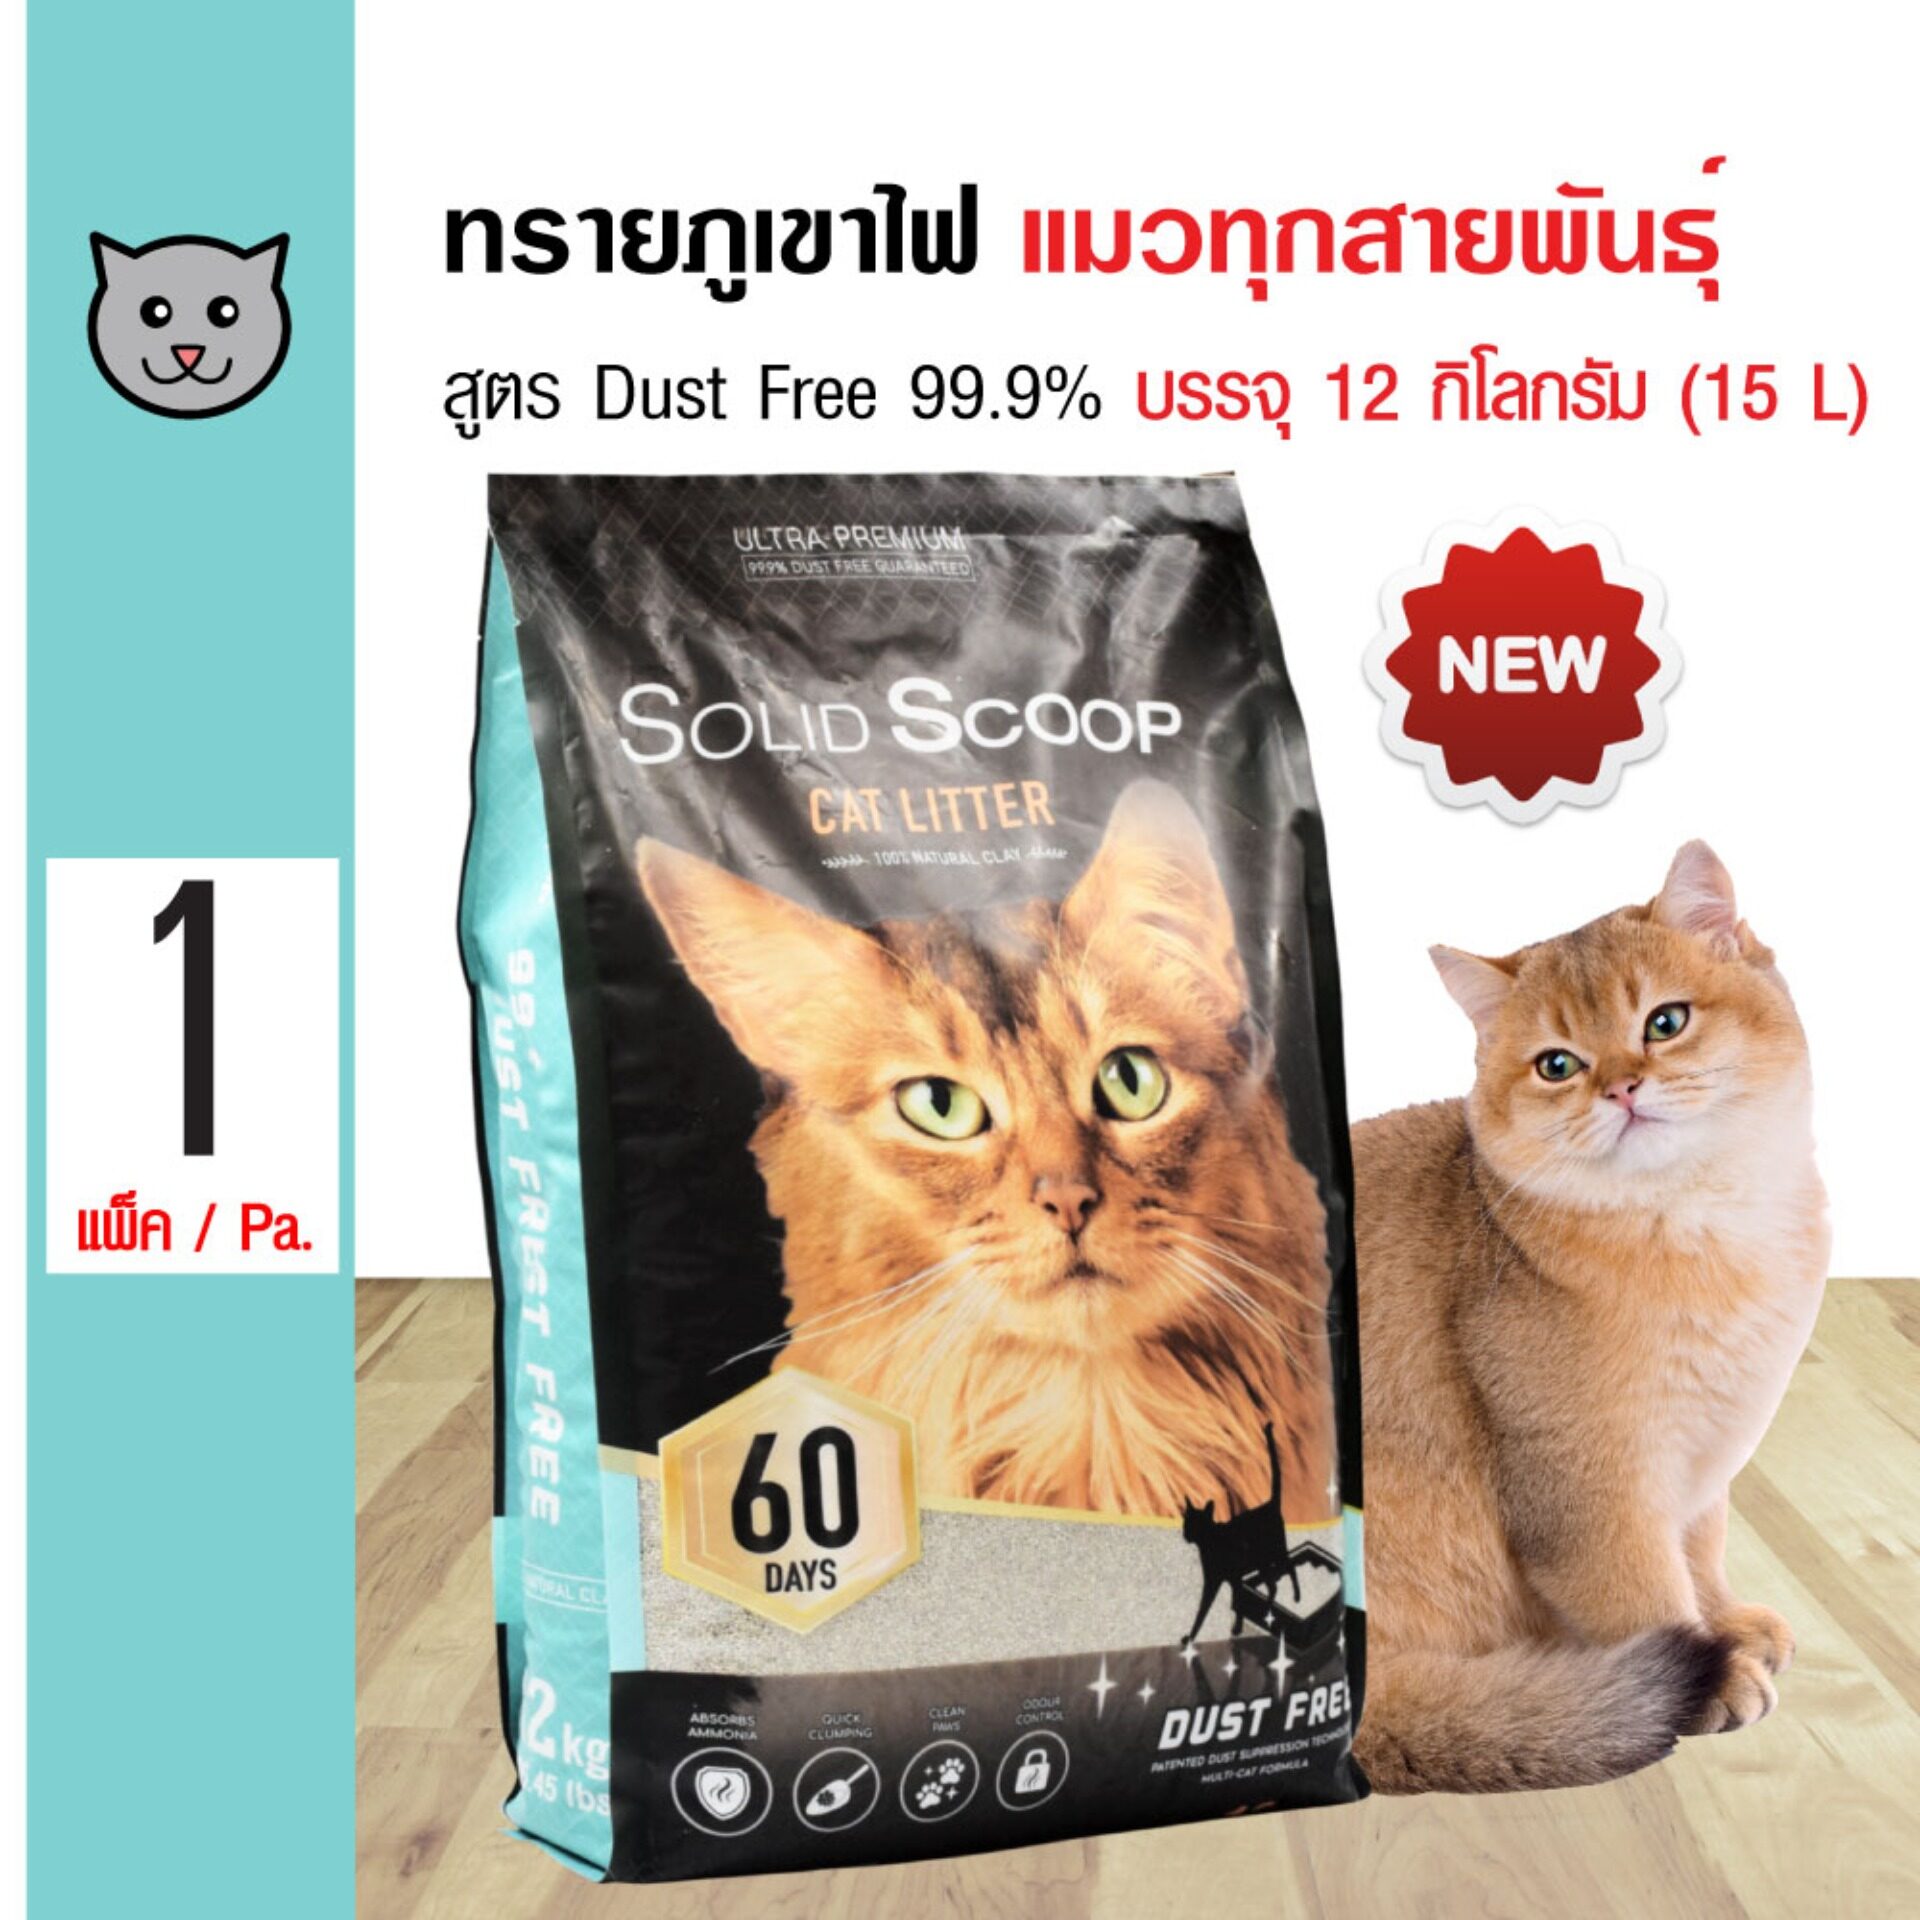 Solid Scoop Dust Free ทรายแมว ทรายภูเขาไฟ สูตรไร้ฝุน 99.9% กำจัดกลิ่นเหม็น บรรจุ 12 กิโลกรัม (15 ลิตร/ถุง)